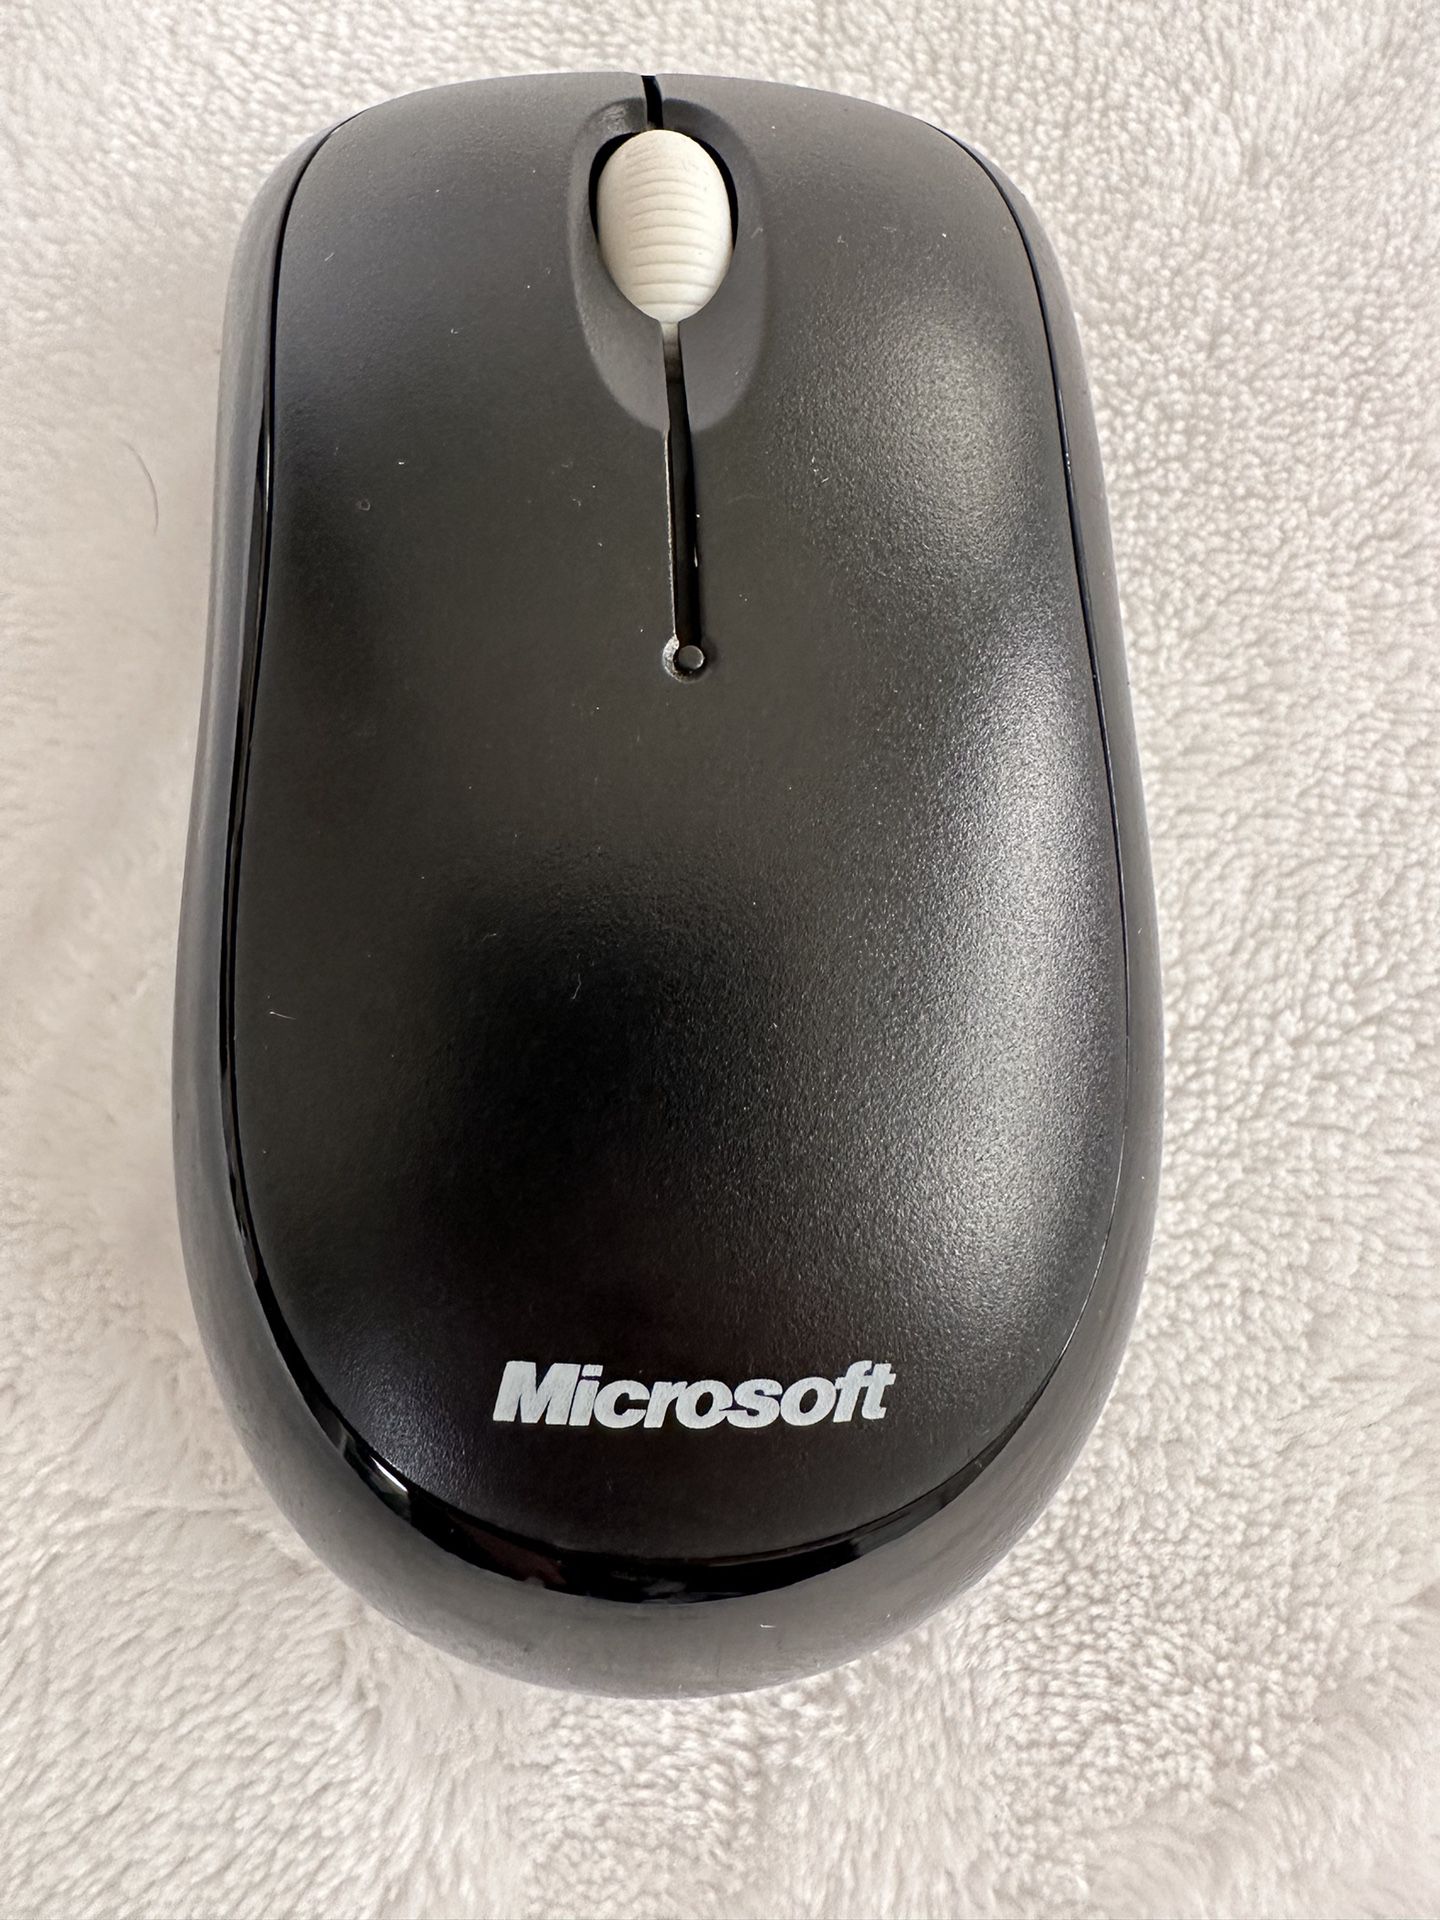 Microsoft Wireless Bluetooth Optical Mouse